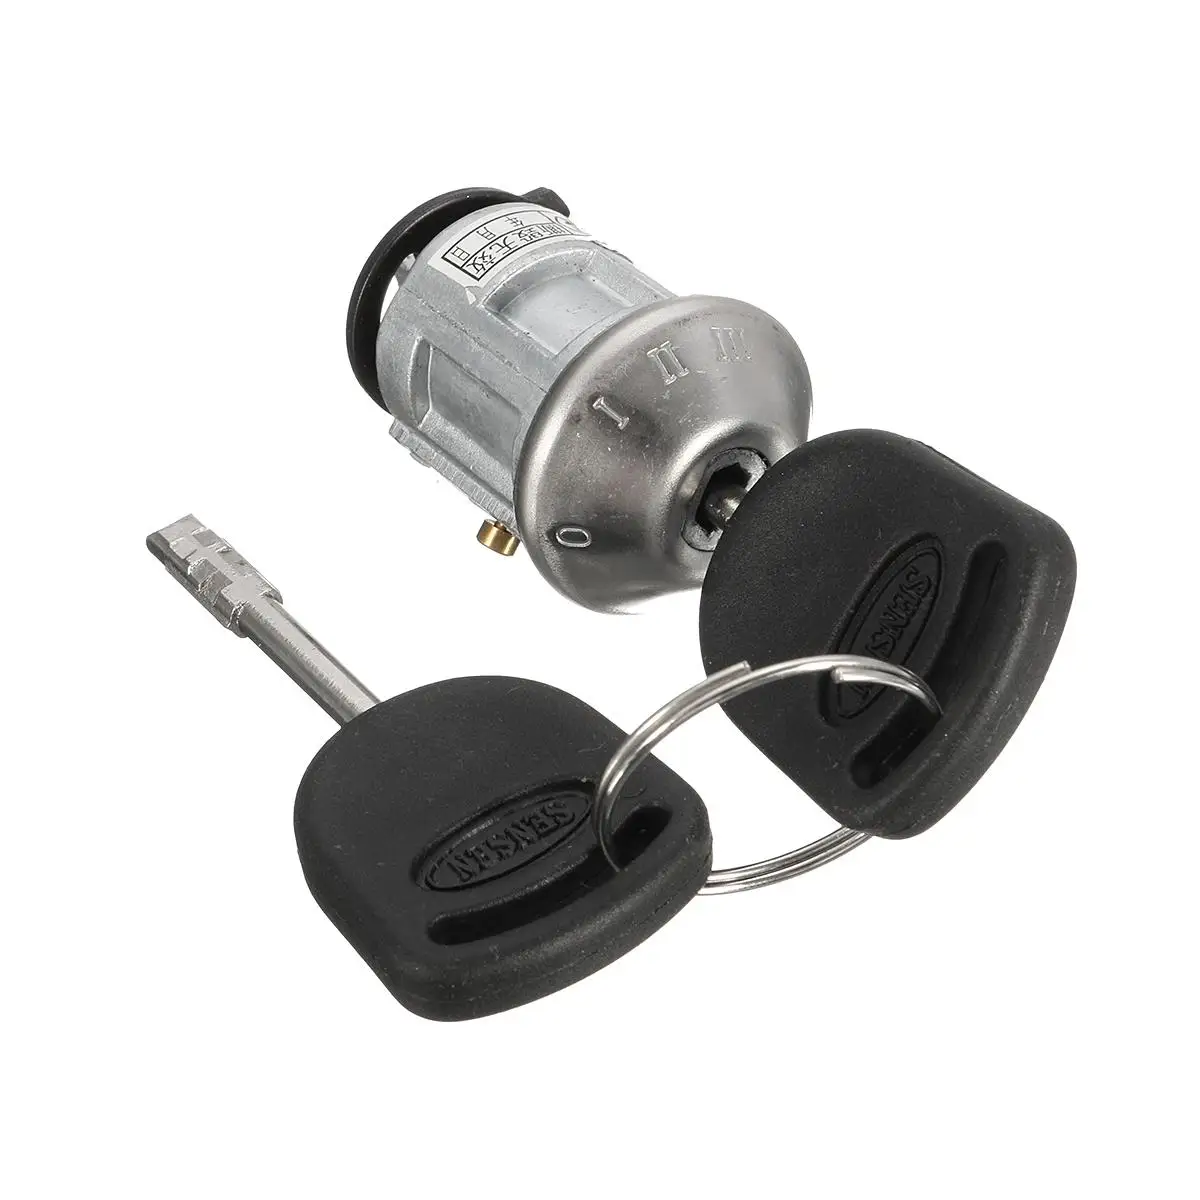 

Car Front Ignition Barrel Key Switch Lock Repair Kit & 2 Keys Set For Ford Transit MK6 2000-2006 1022184